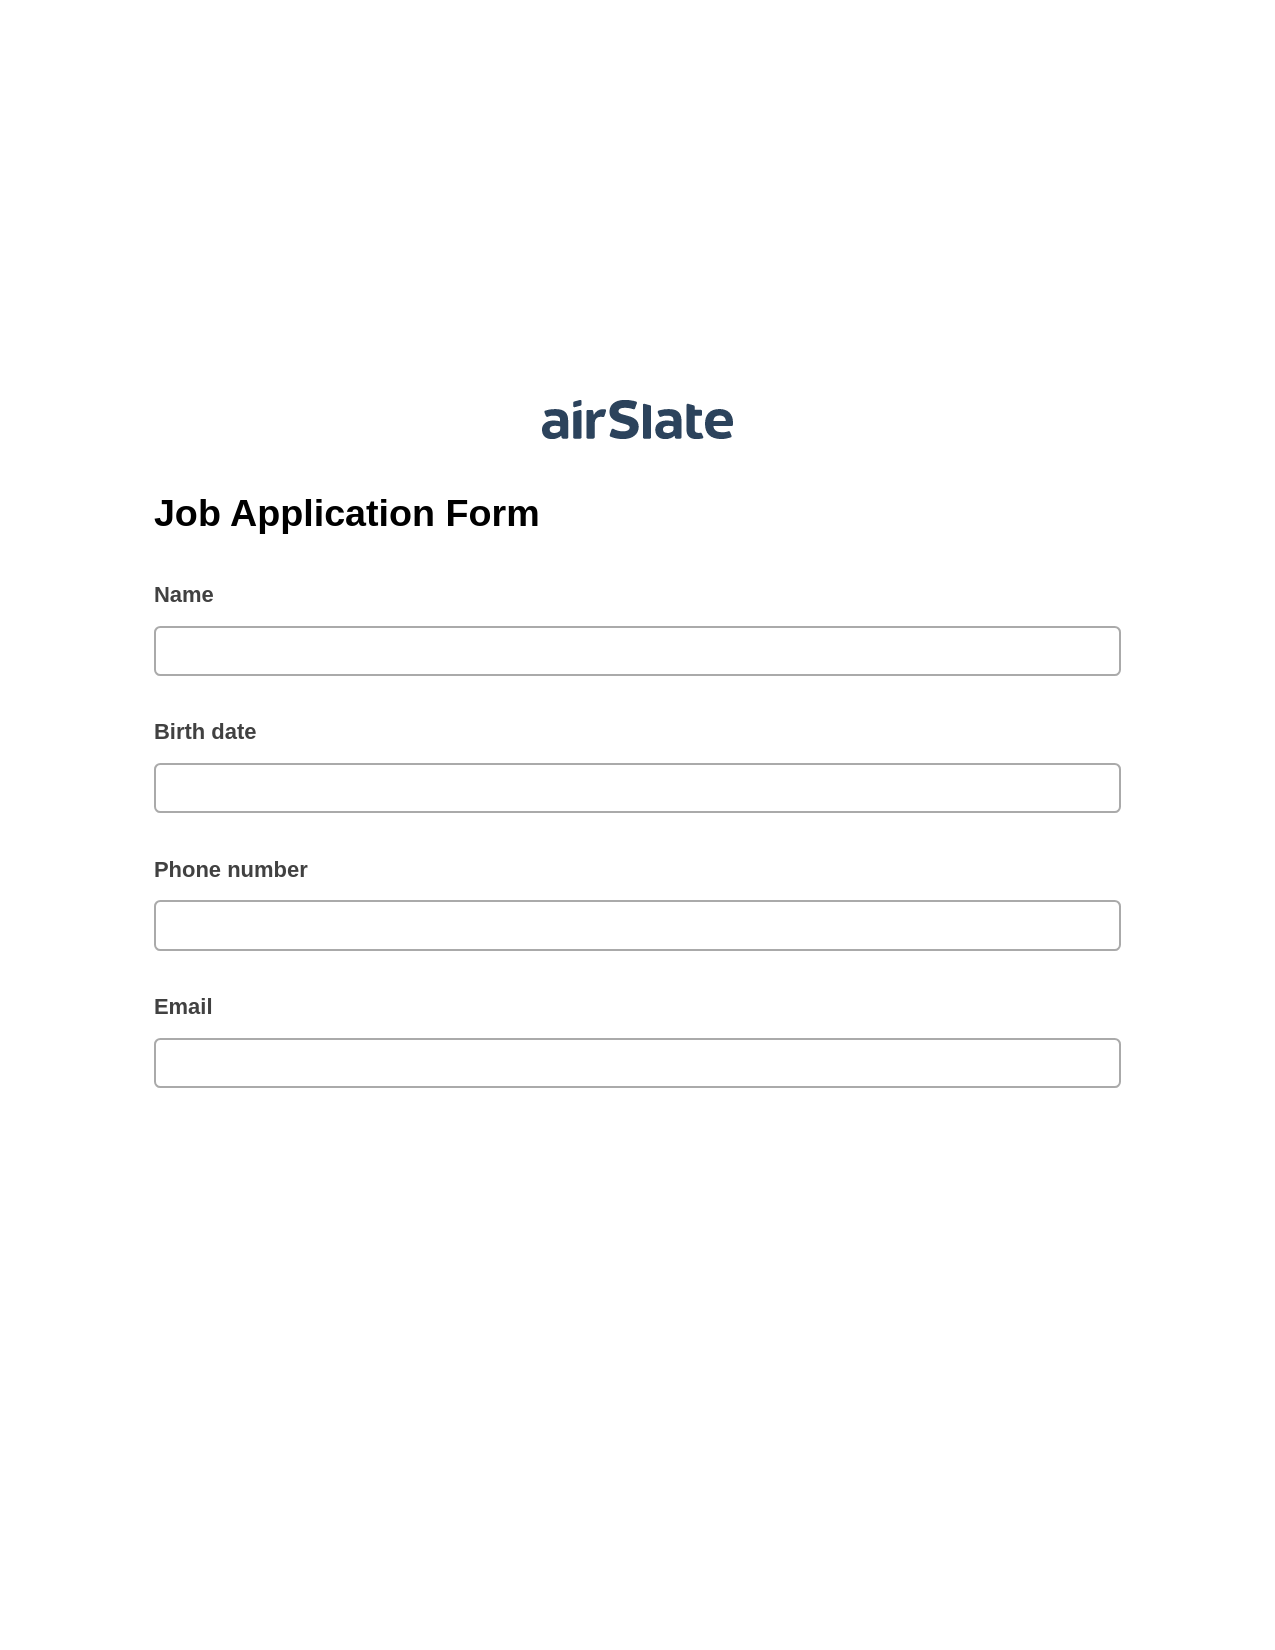 Multirole Job Application Form Pre-fill from Litmos bot, Update NetSuite Records Bot, Slack Two-Way Binding Bot